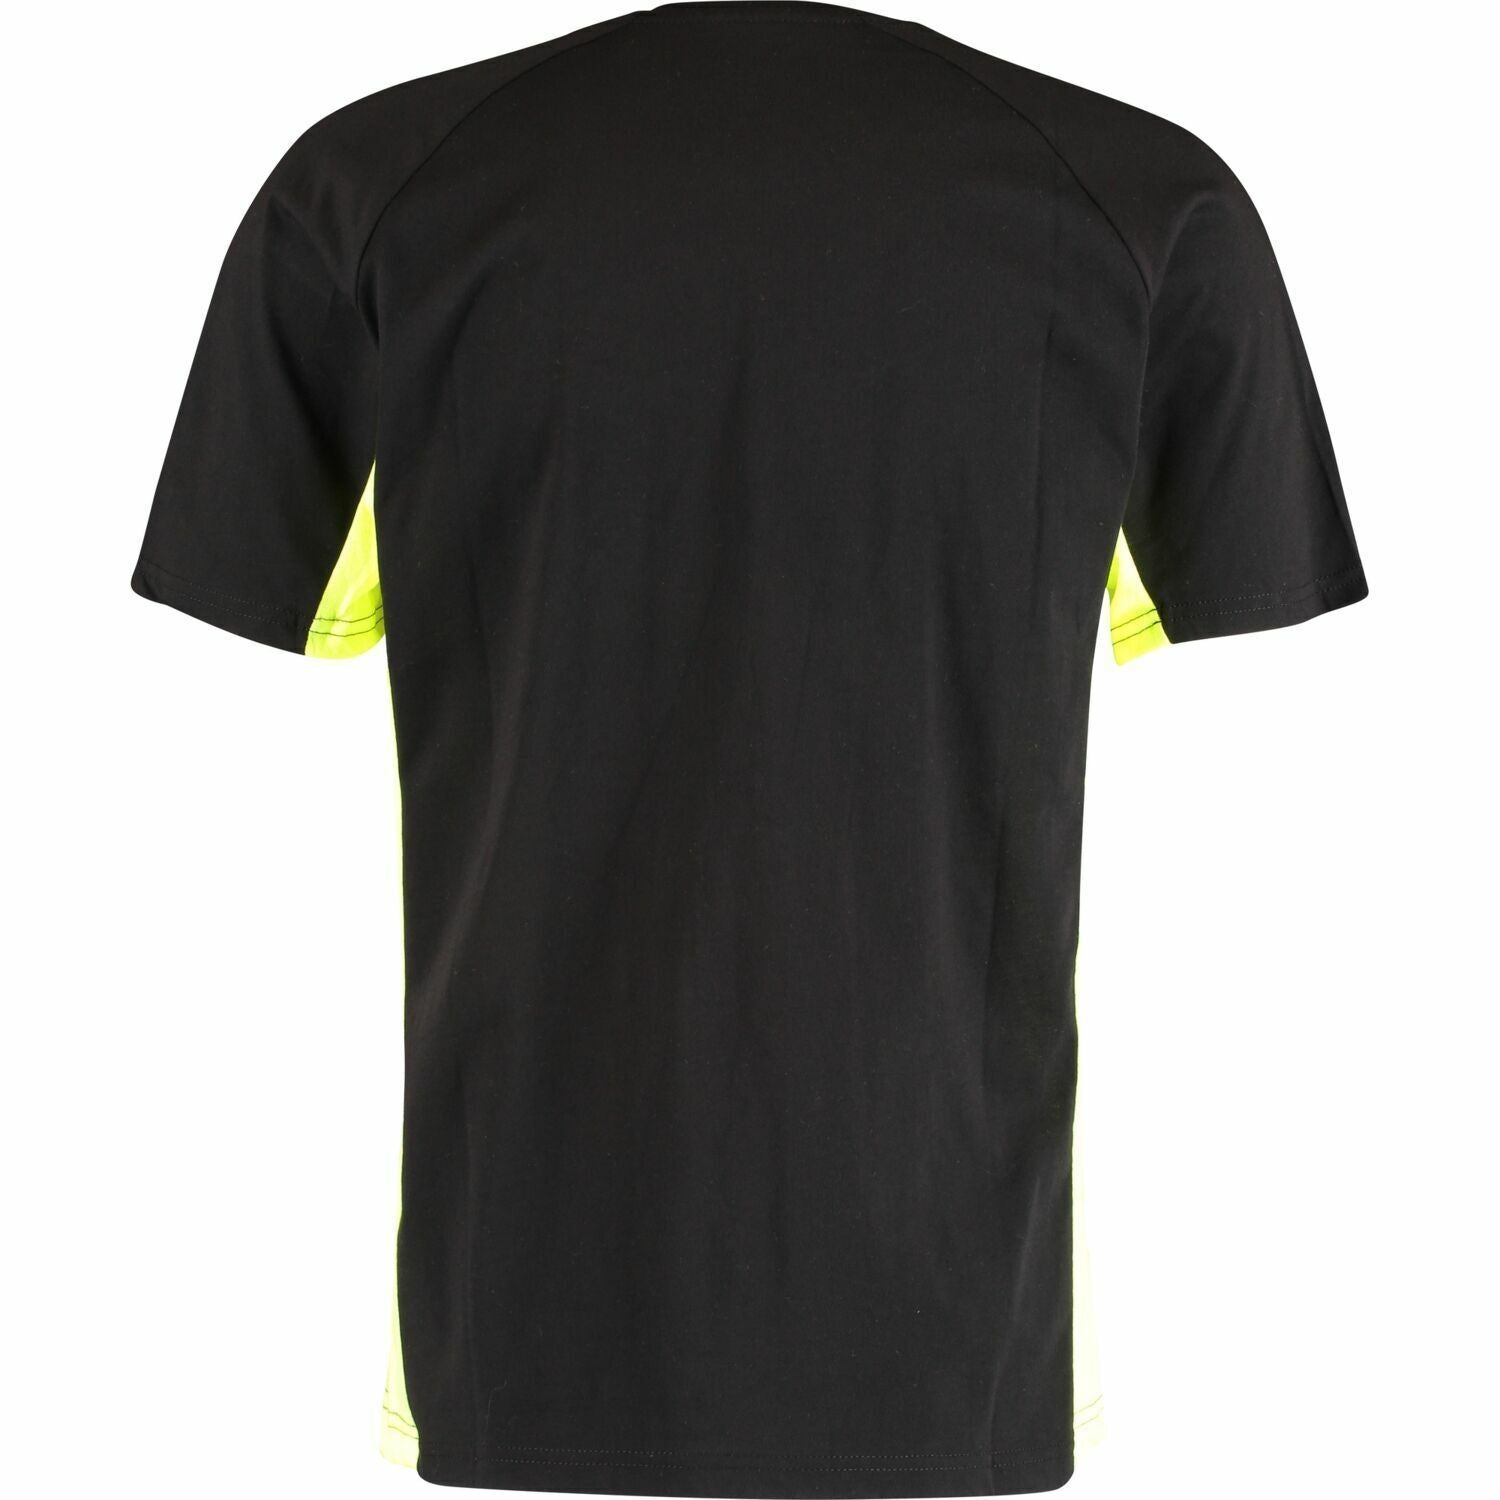 ALPHA INDUSTRIES Menâs Black & Neon Yellow Contrast T-Shirt, size S